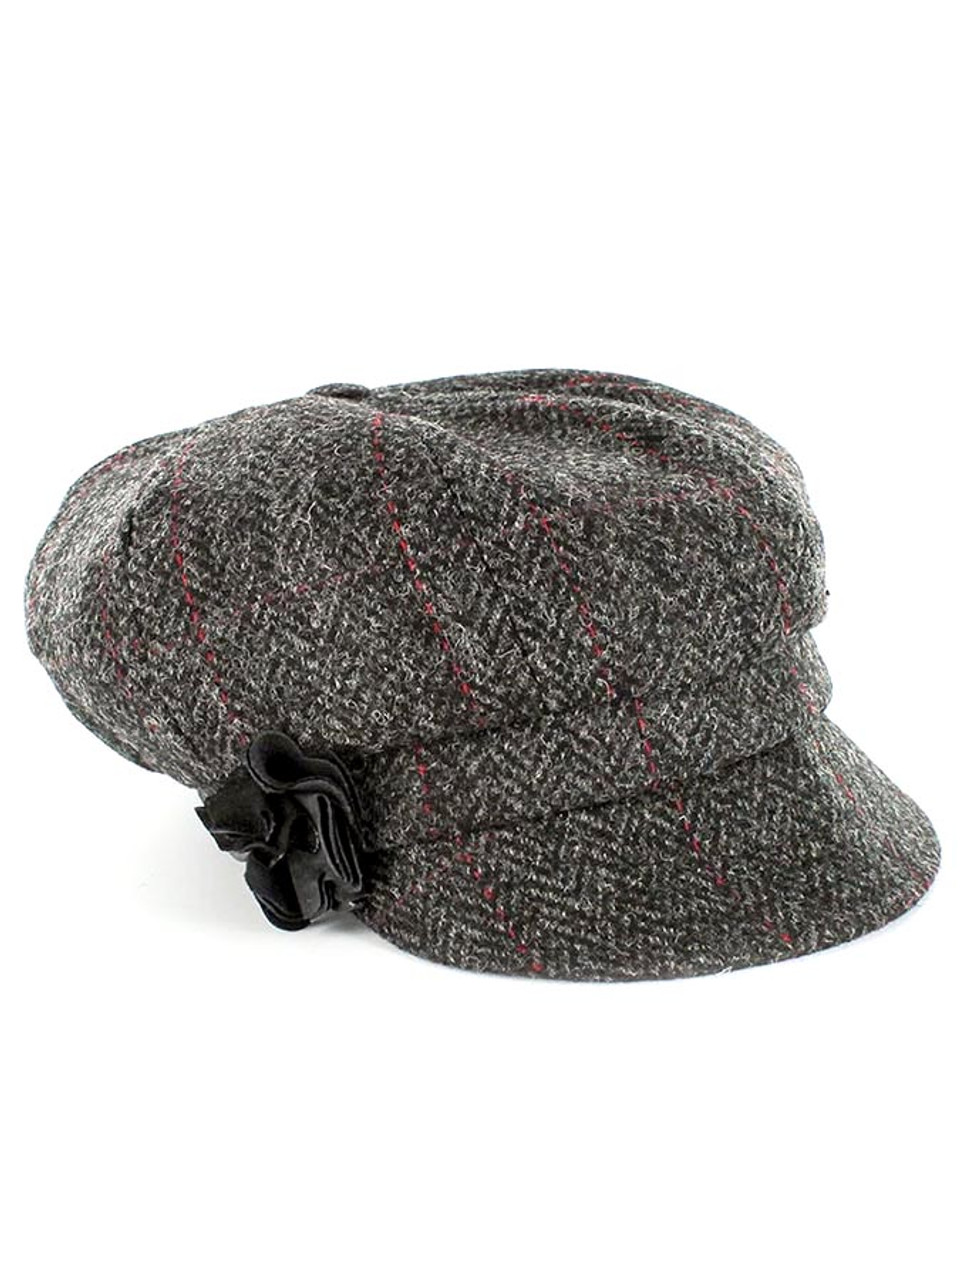 Ladies Tweed Newsboy Hat - Charcoal with Red | Mucros Weavers